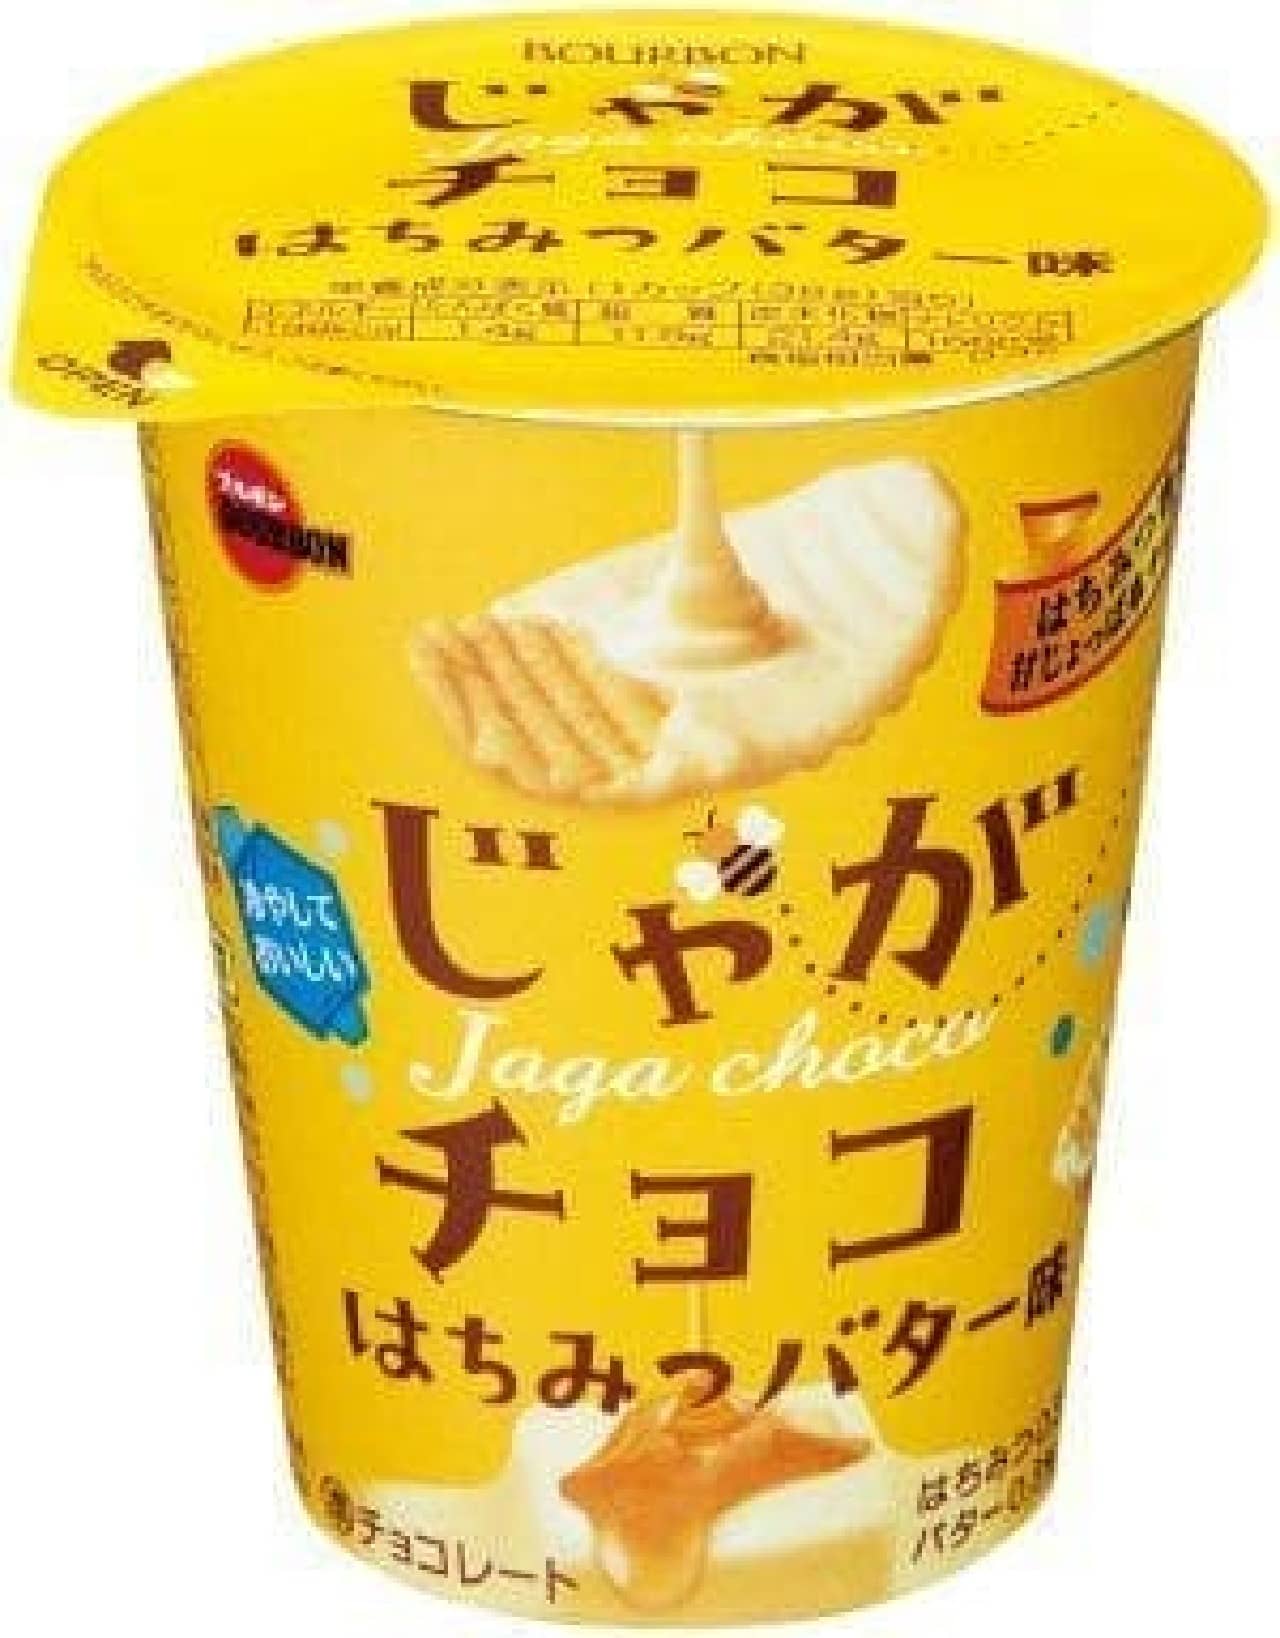 jyaga-choco-honey-butter.jpg